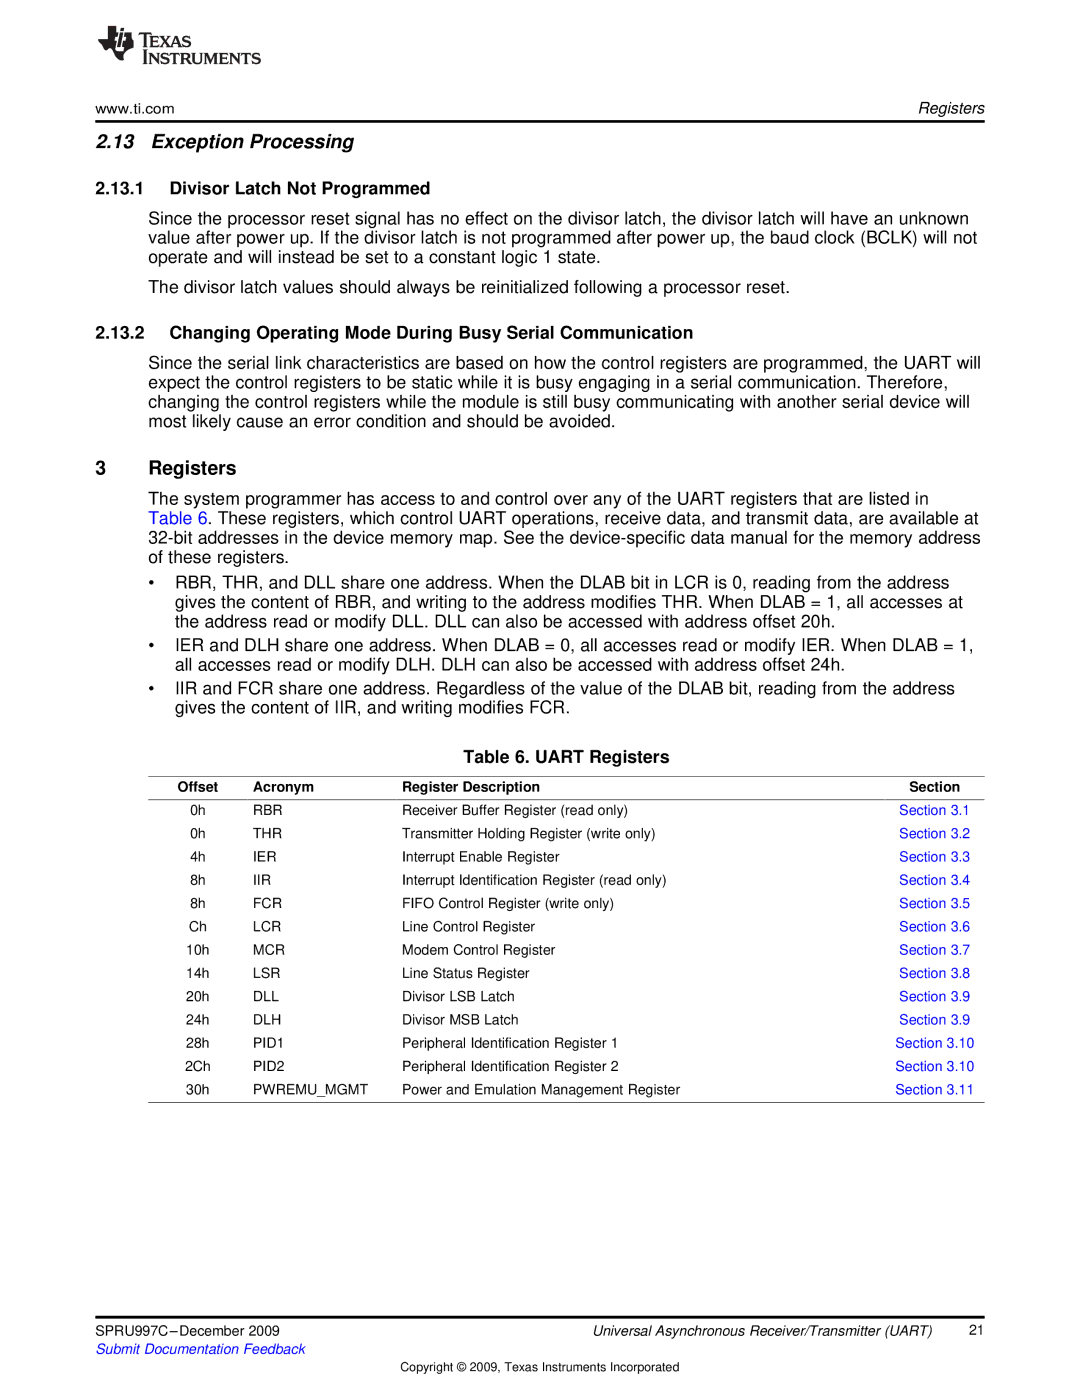 Texas Instruments TMS320DM643X DMP manual Exception Processing, Divisor Latch Not Programmed, Uart Registers 